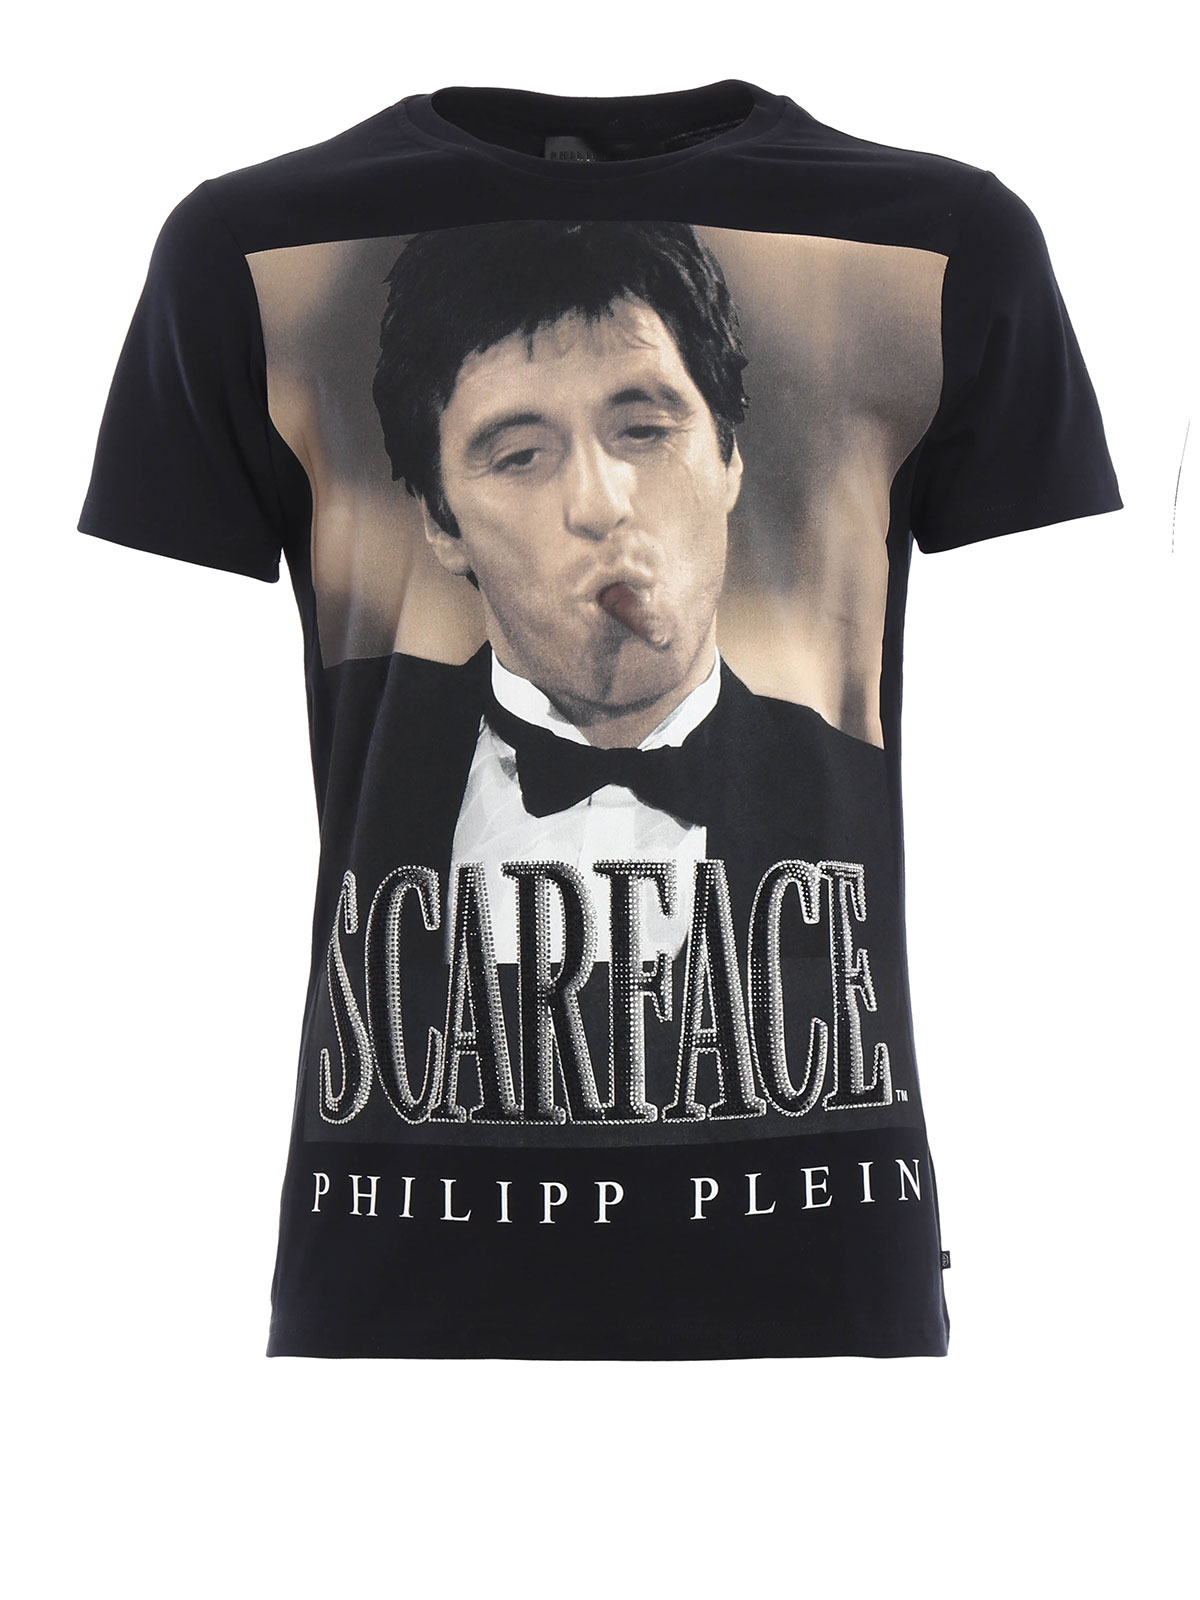 philipp plein scarface shirt